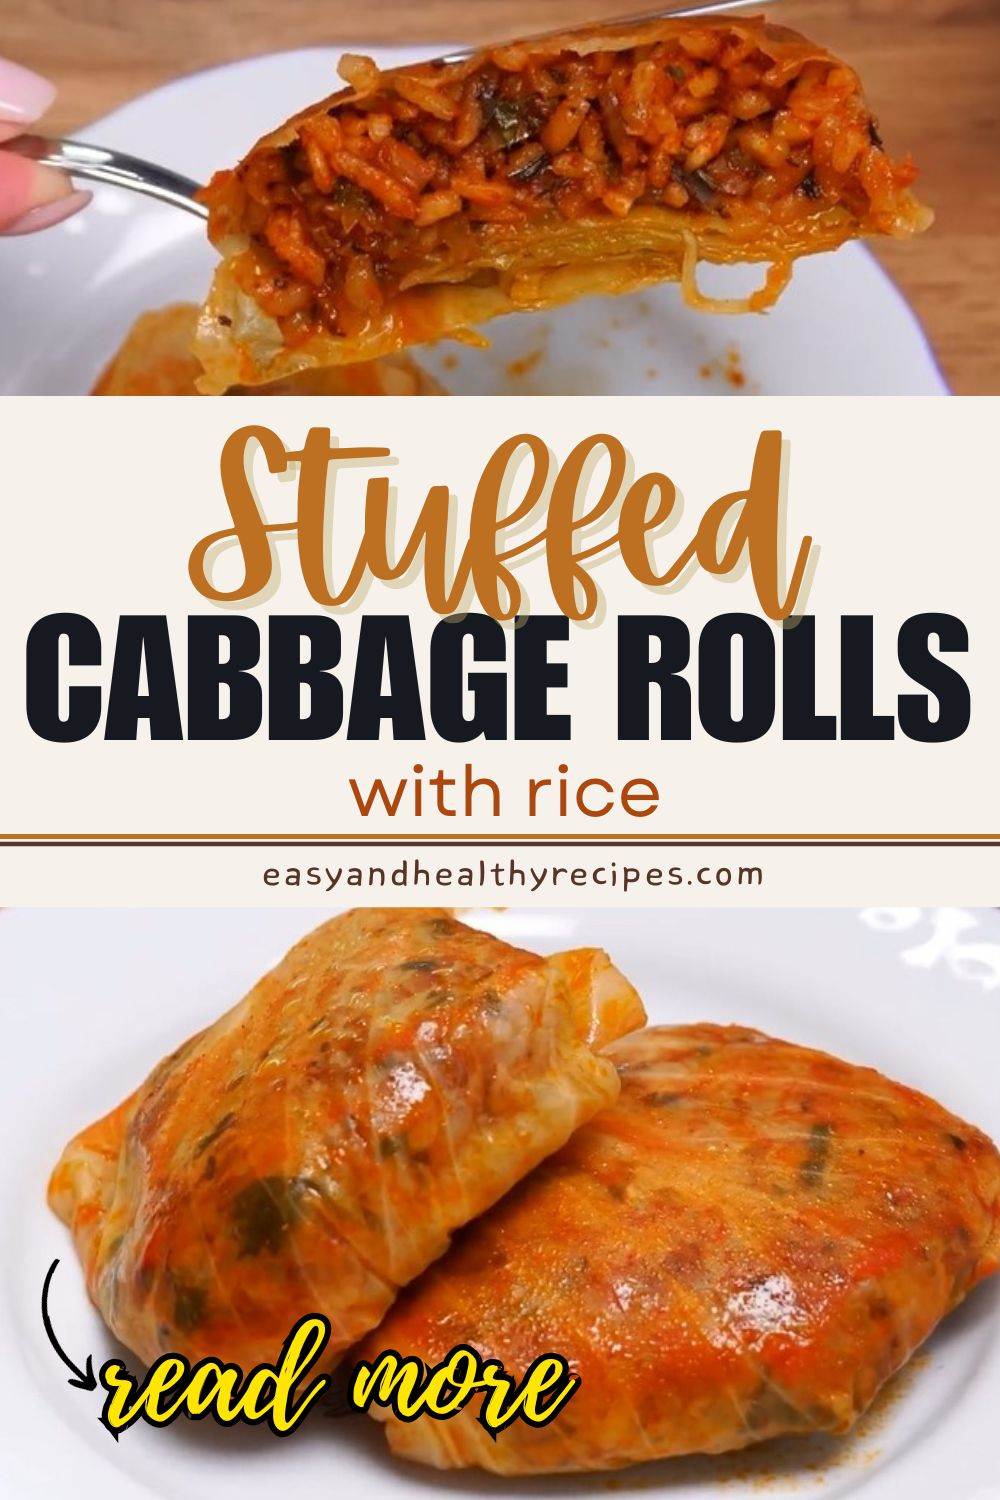 Stuffed Cabbage Rolls